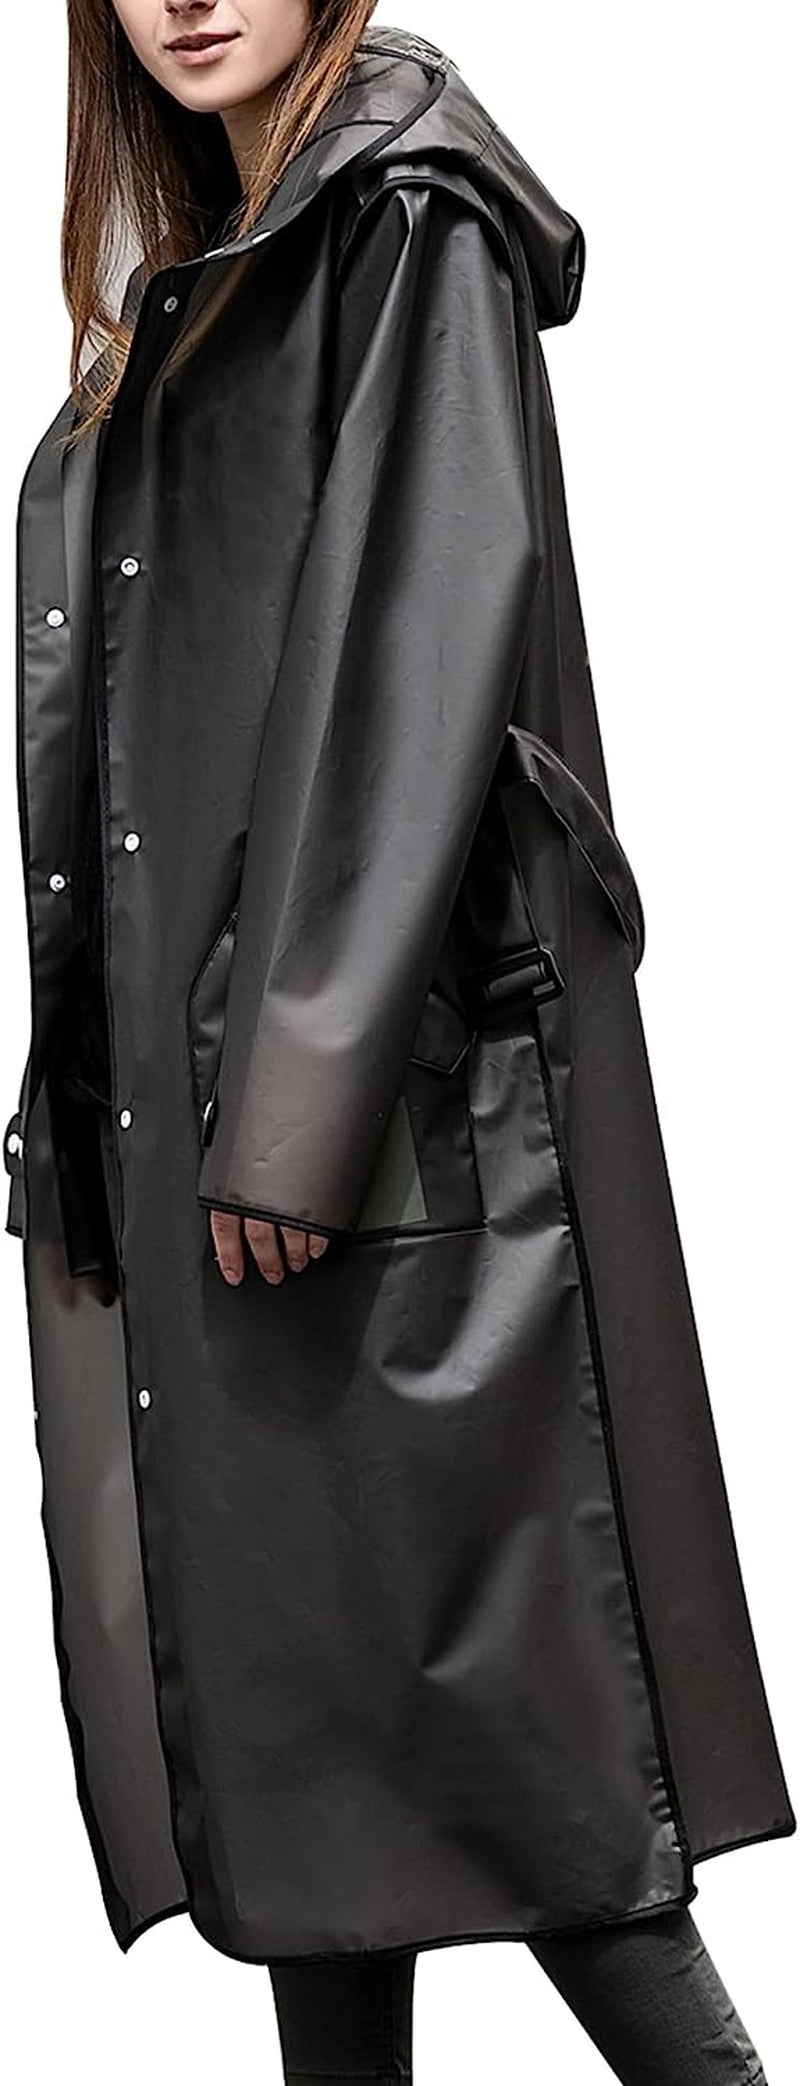 Raincoats For Women Men Reusable Portable Waterproof EVA Long Rain Ponchos with Hoods